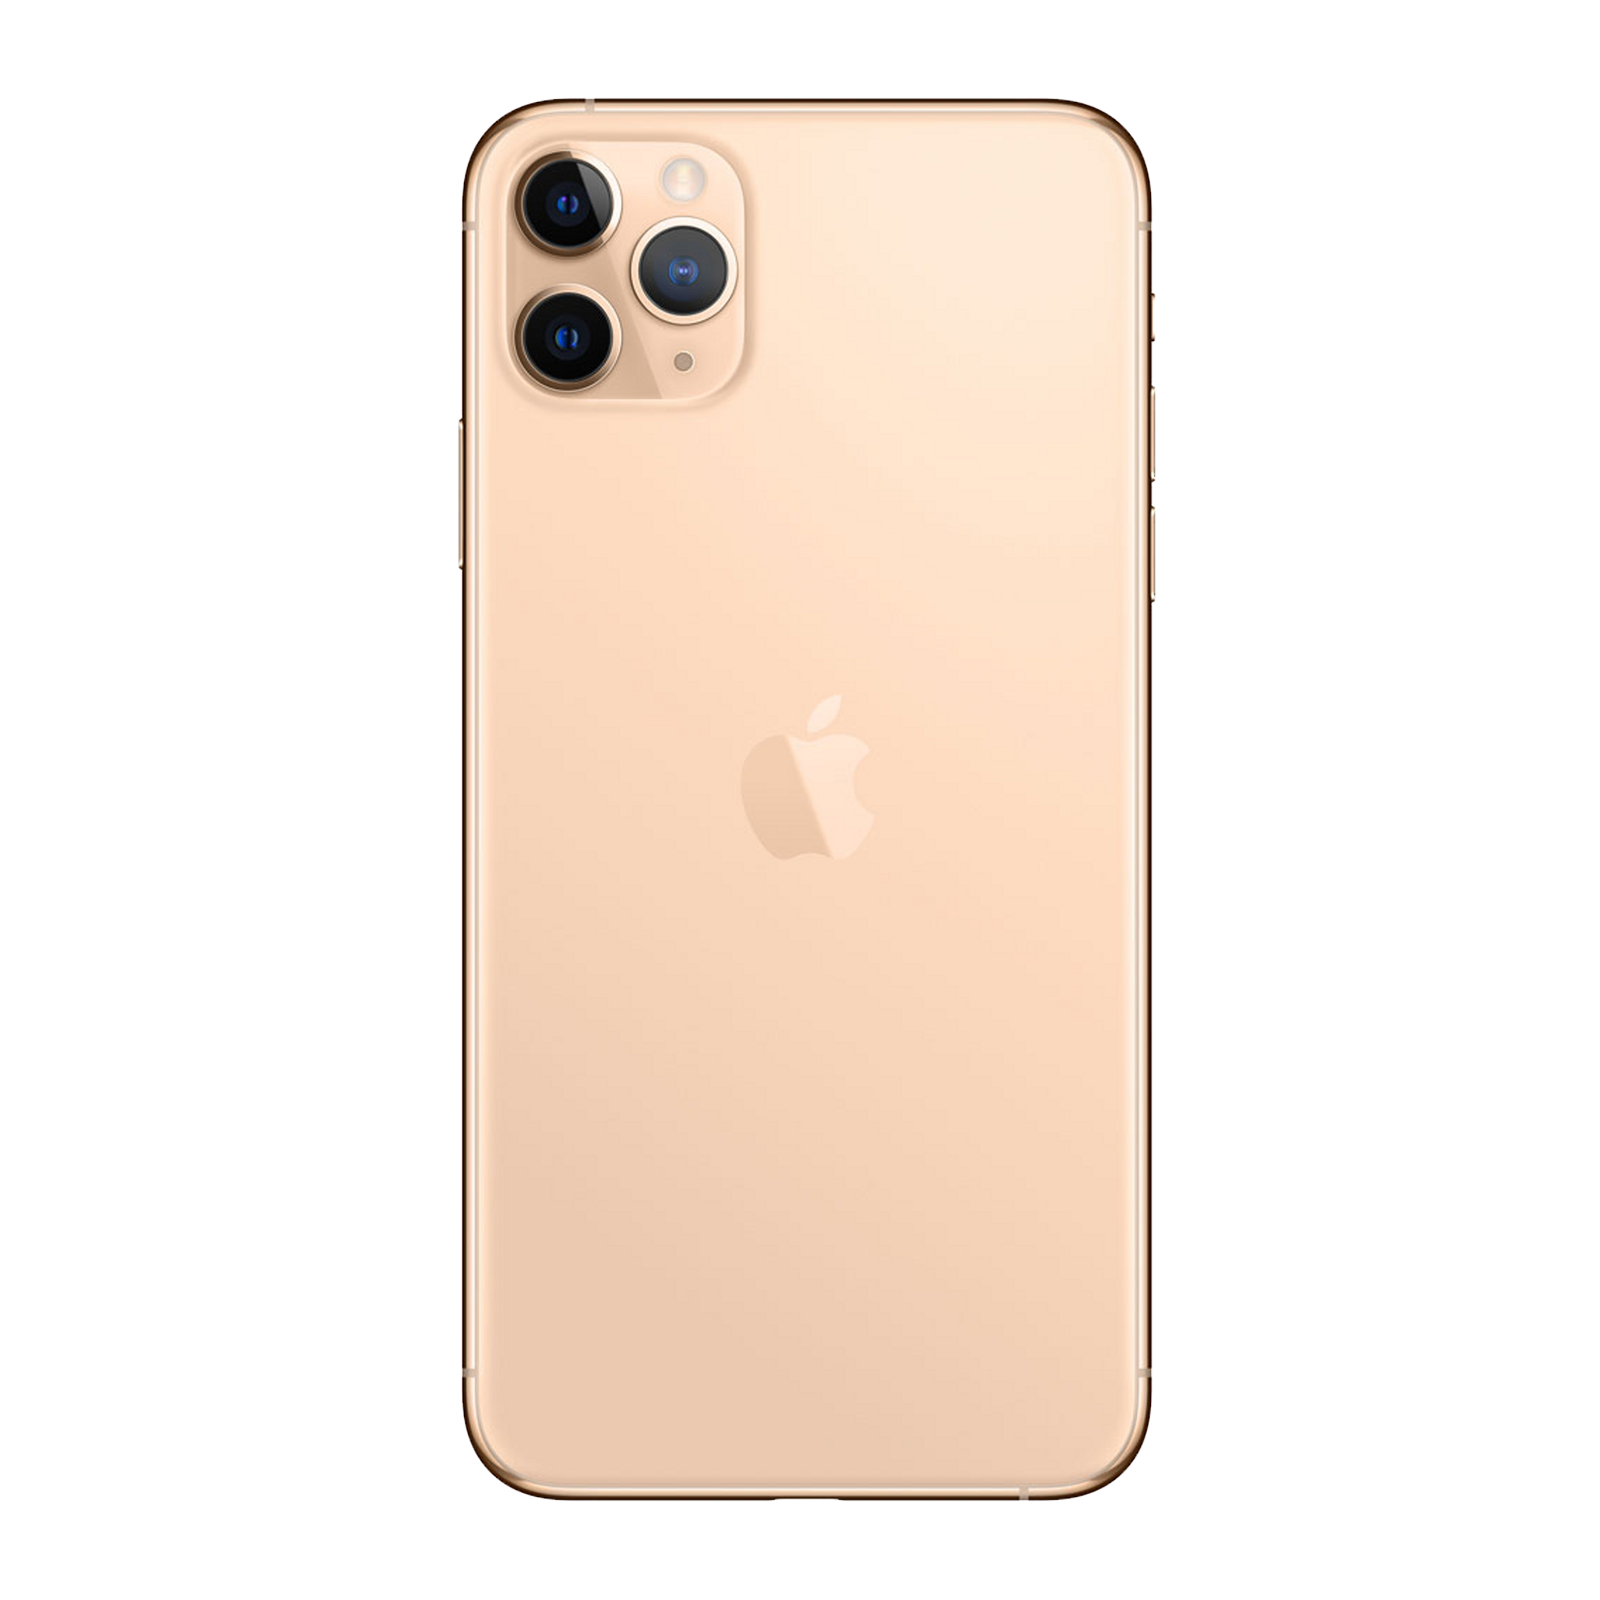 iPhone 11 Pro 512GB Gold Pristine Unlocked - New Battery